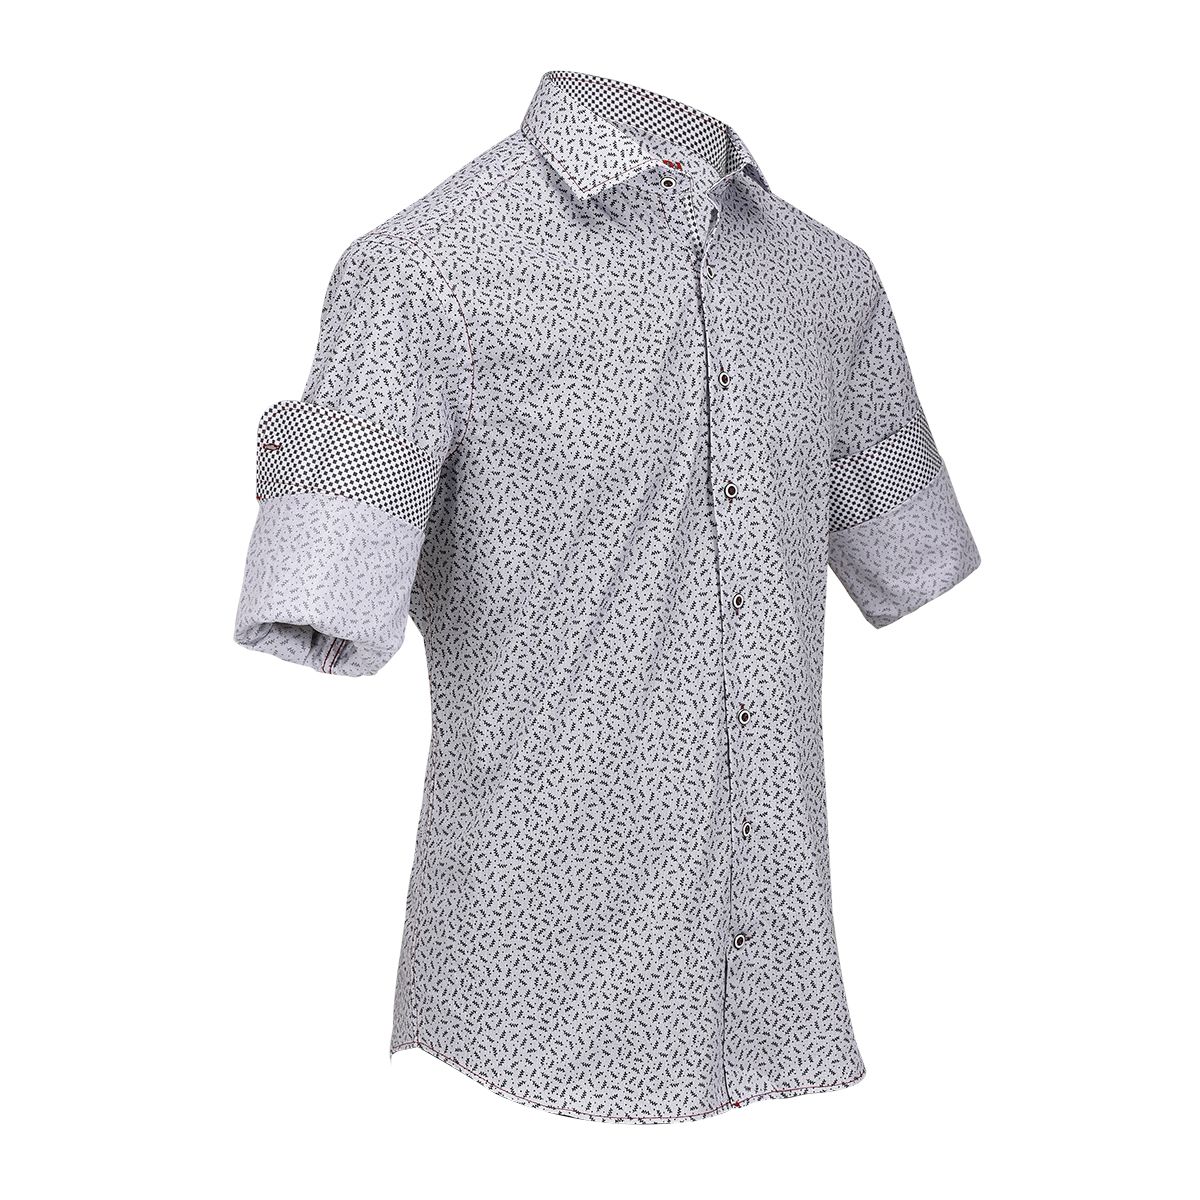 CM0W459 - Cuadra white casual fashion soft cotton abstract shirt for men-Kuet.us